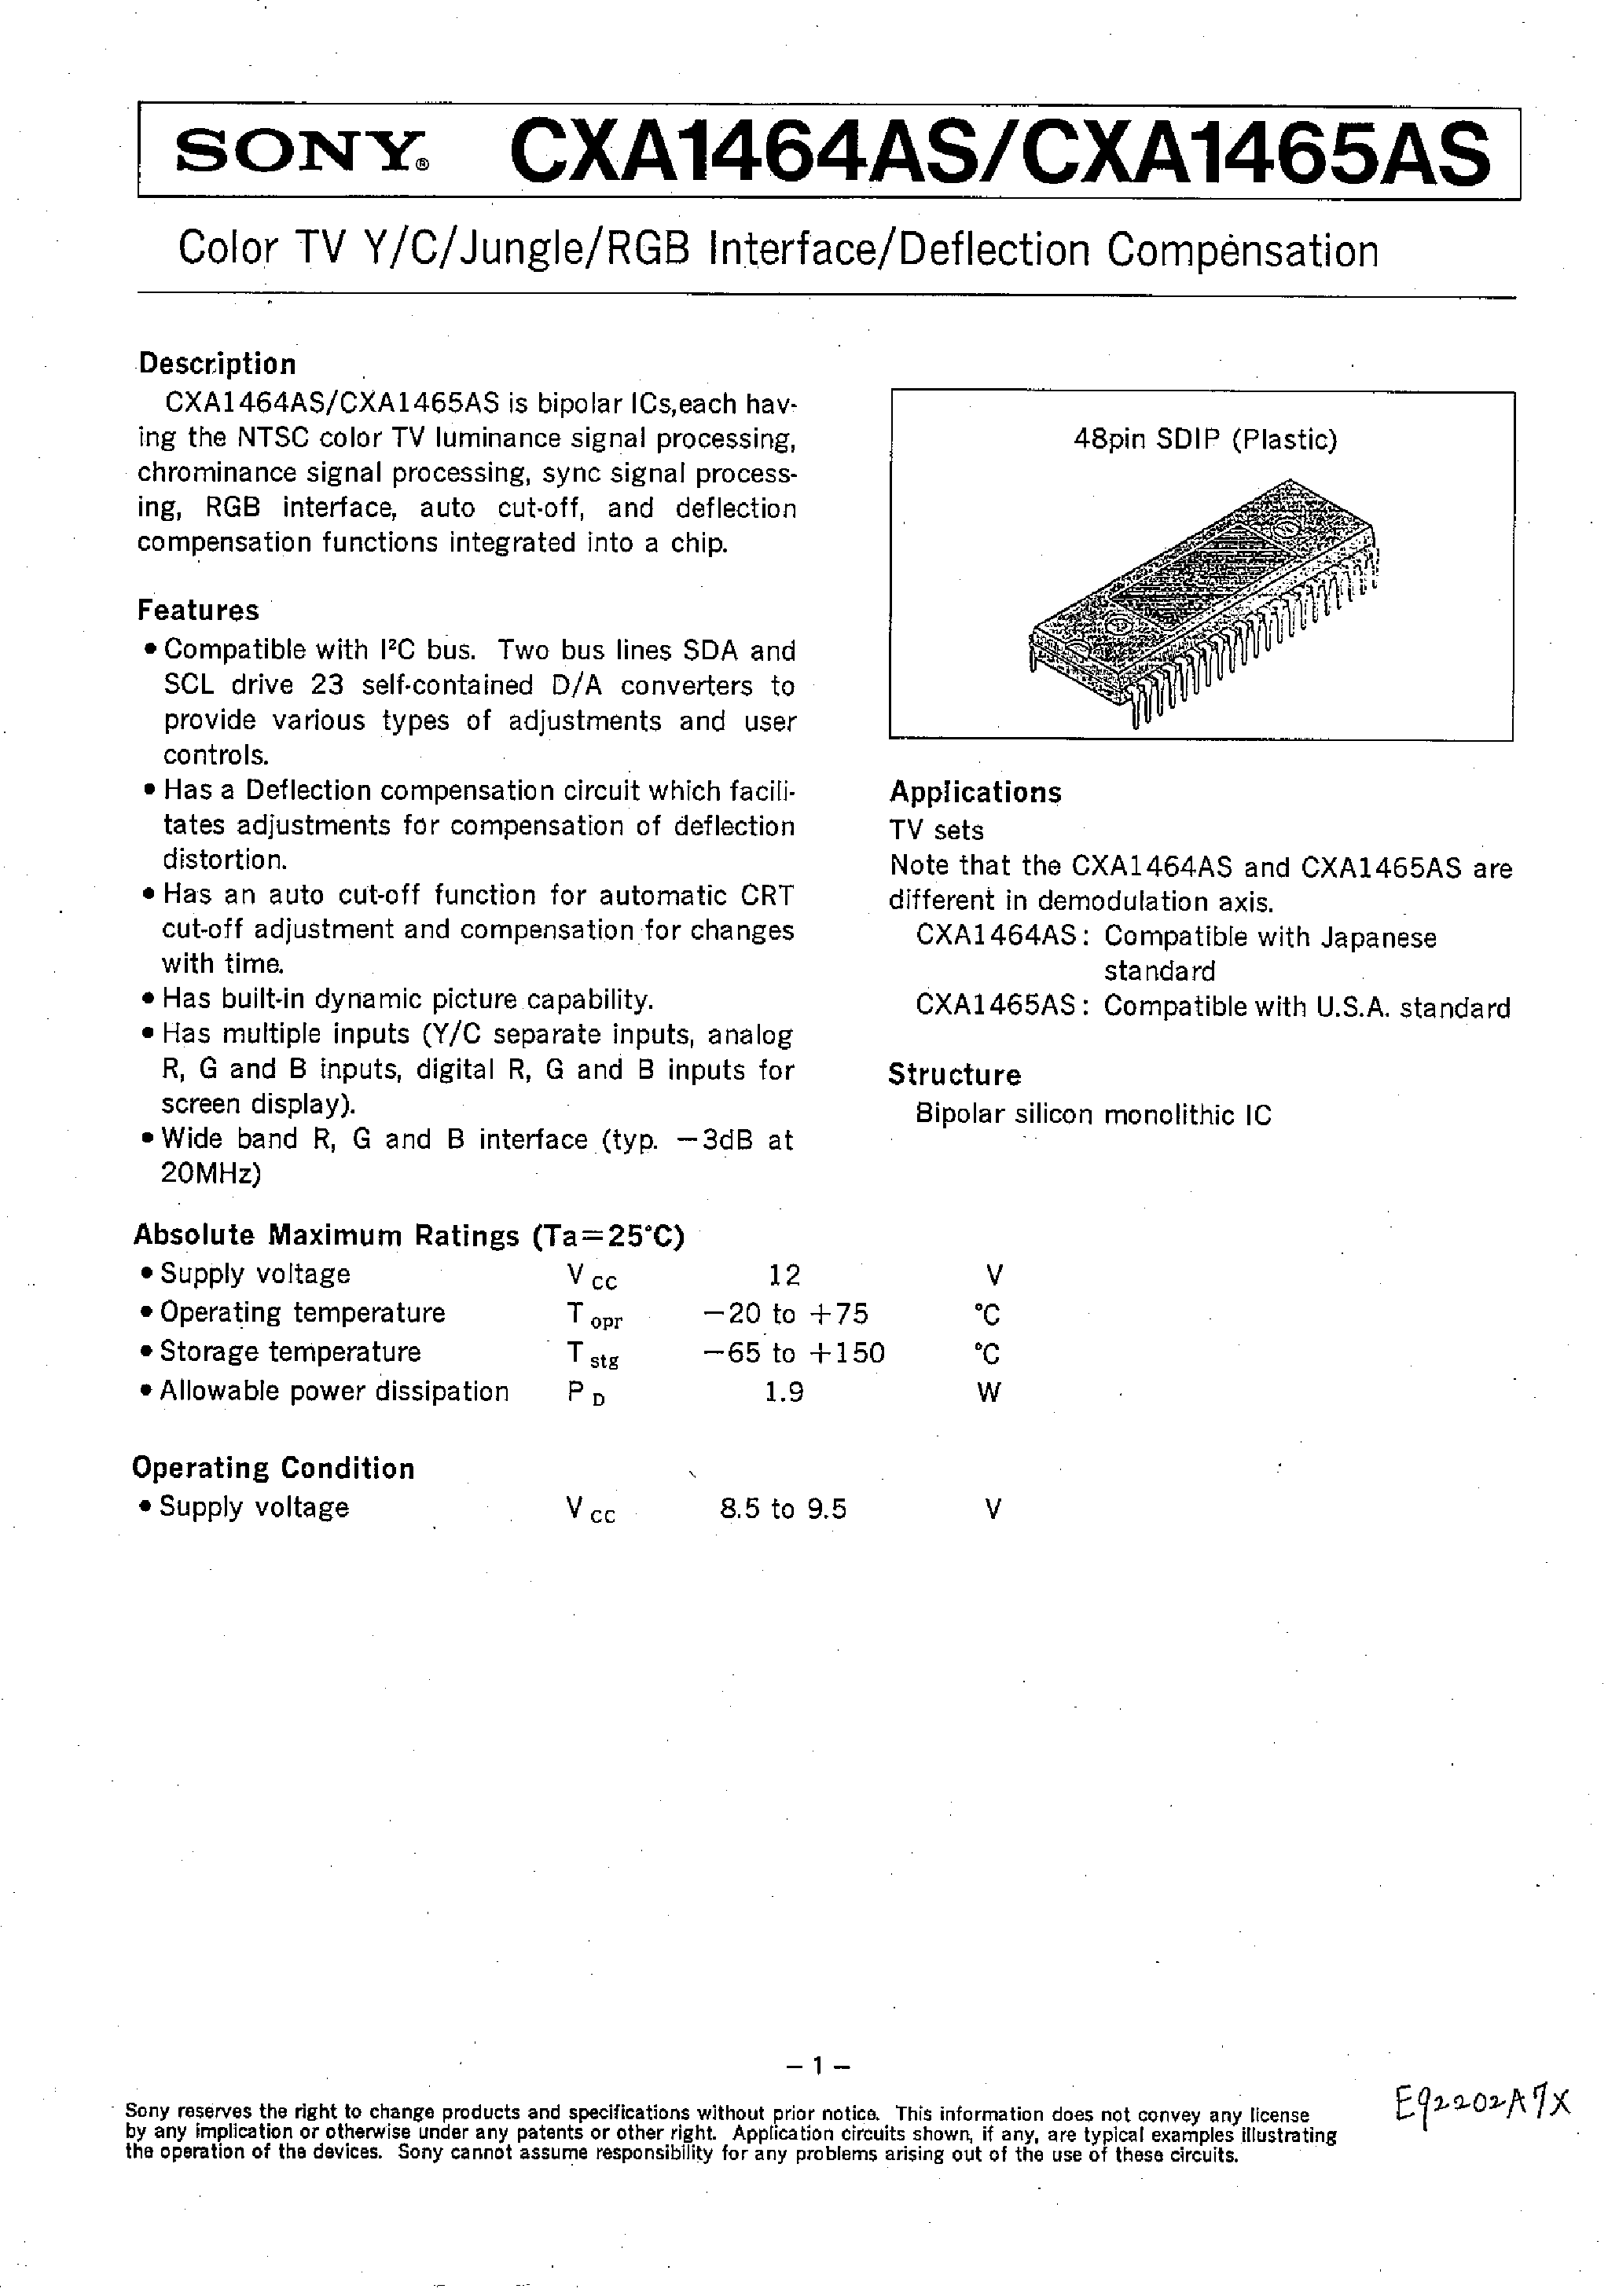 Datasheet CXA1464AS - (CXA1464AS / CXA1465AS) Color TV Y/C/Jungle/RGB Interface / Deflection Compensation page 1